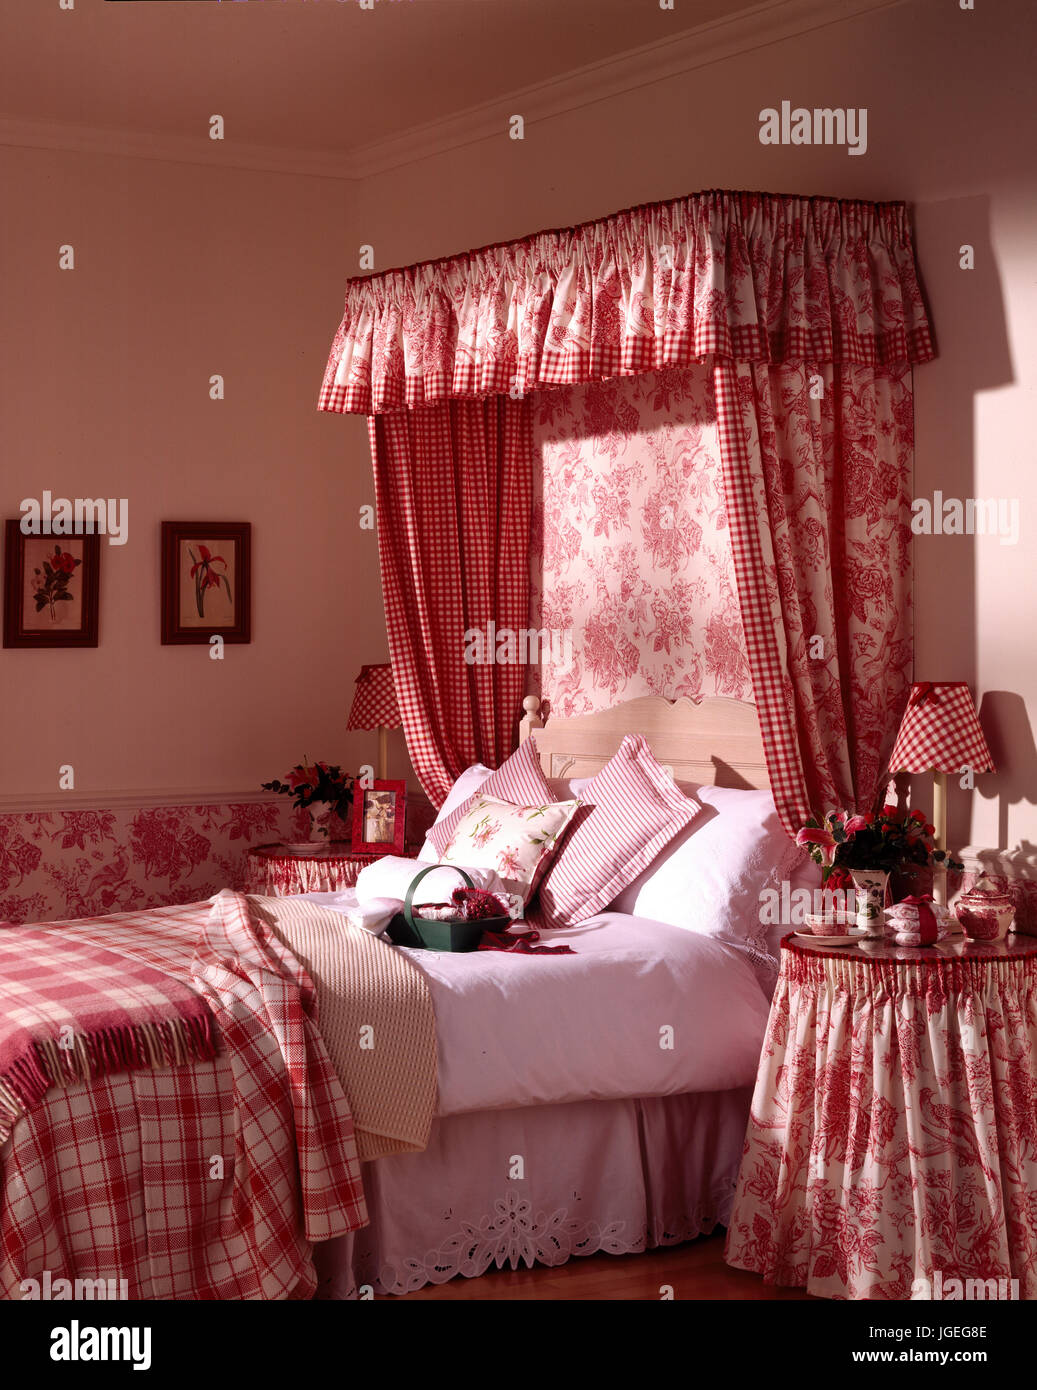 Doppelbett mit tief rosa Stoff Bett Hangings entsprechend bedrucken Wand unter Dado. Stockfoto